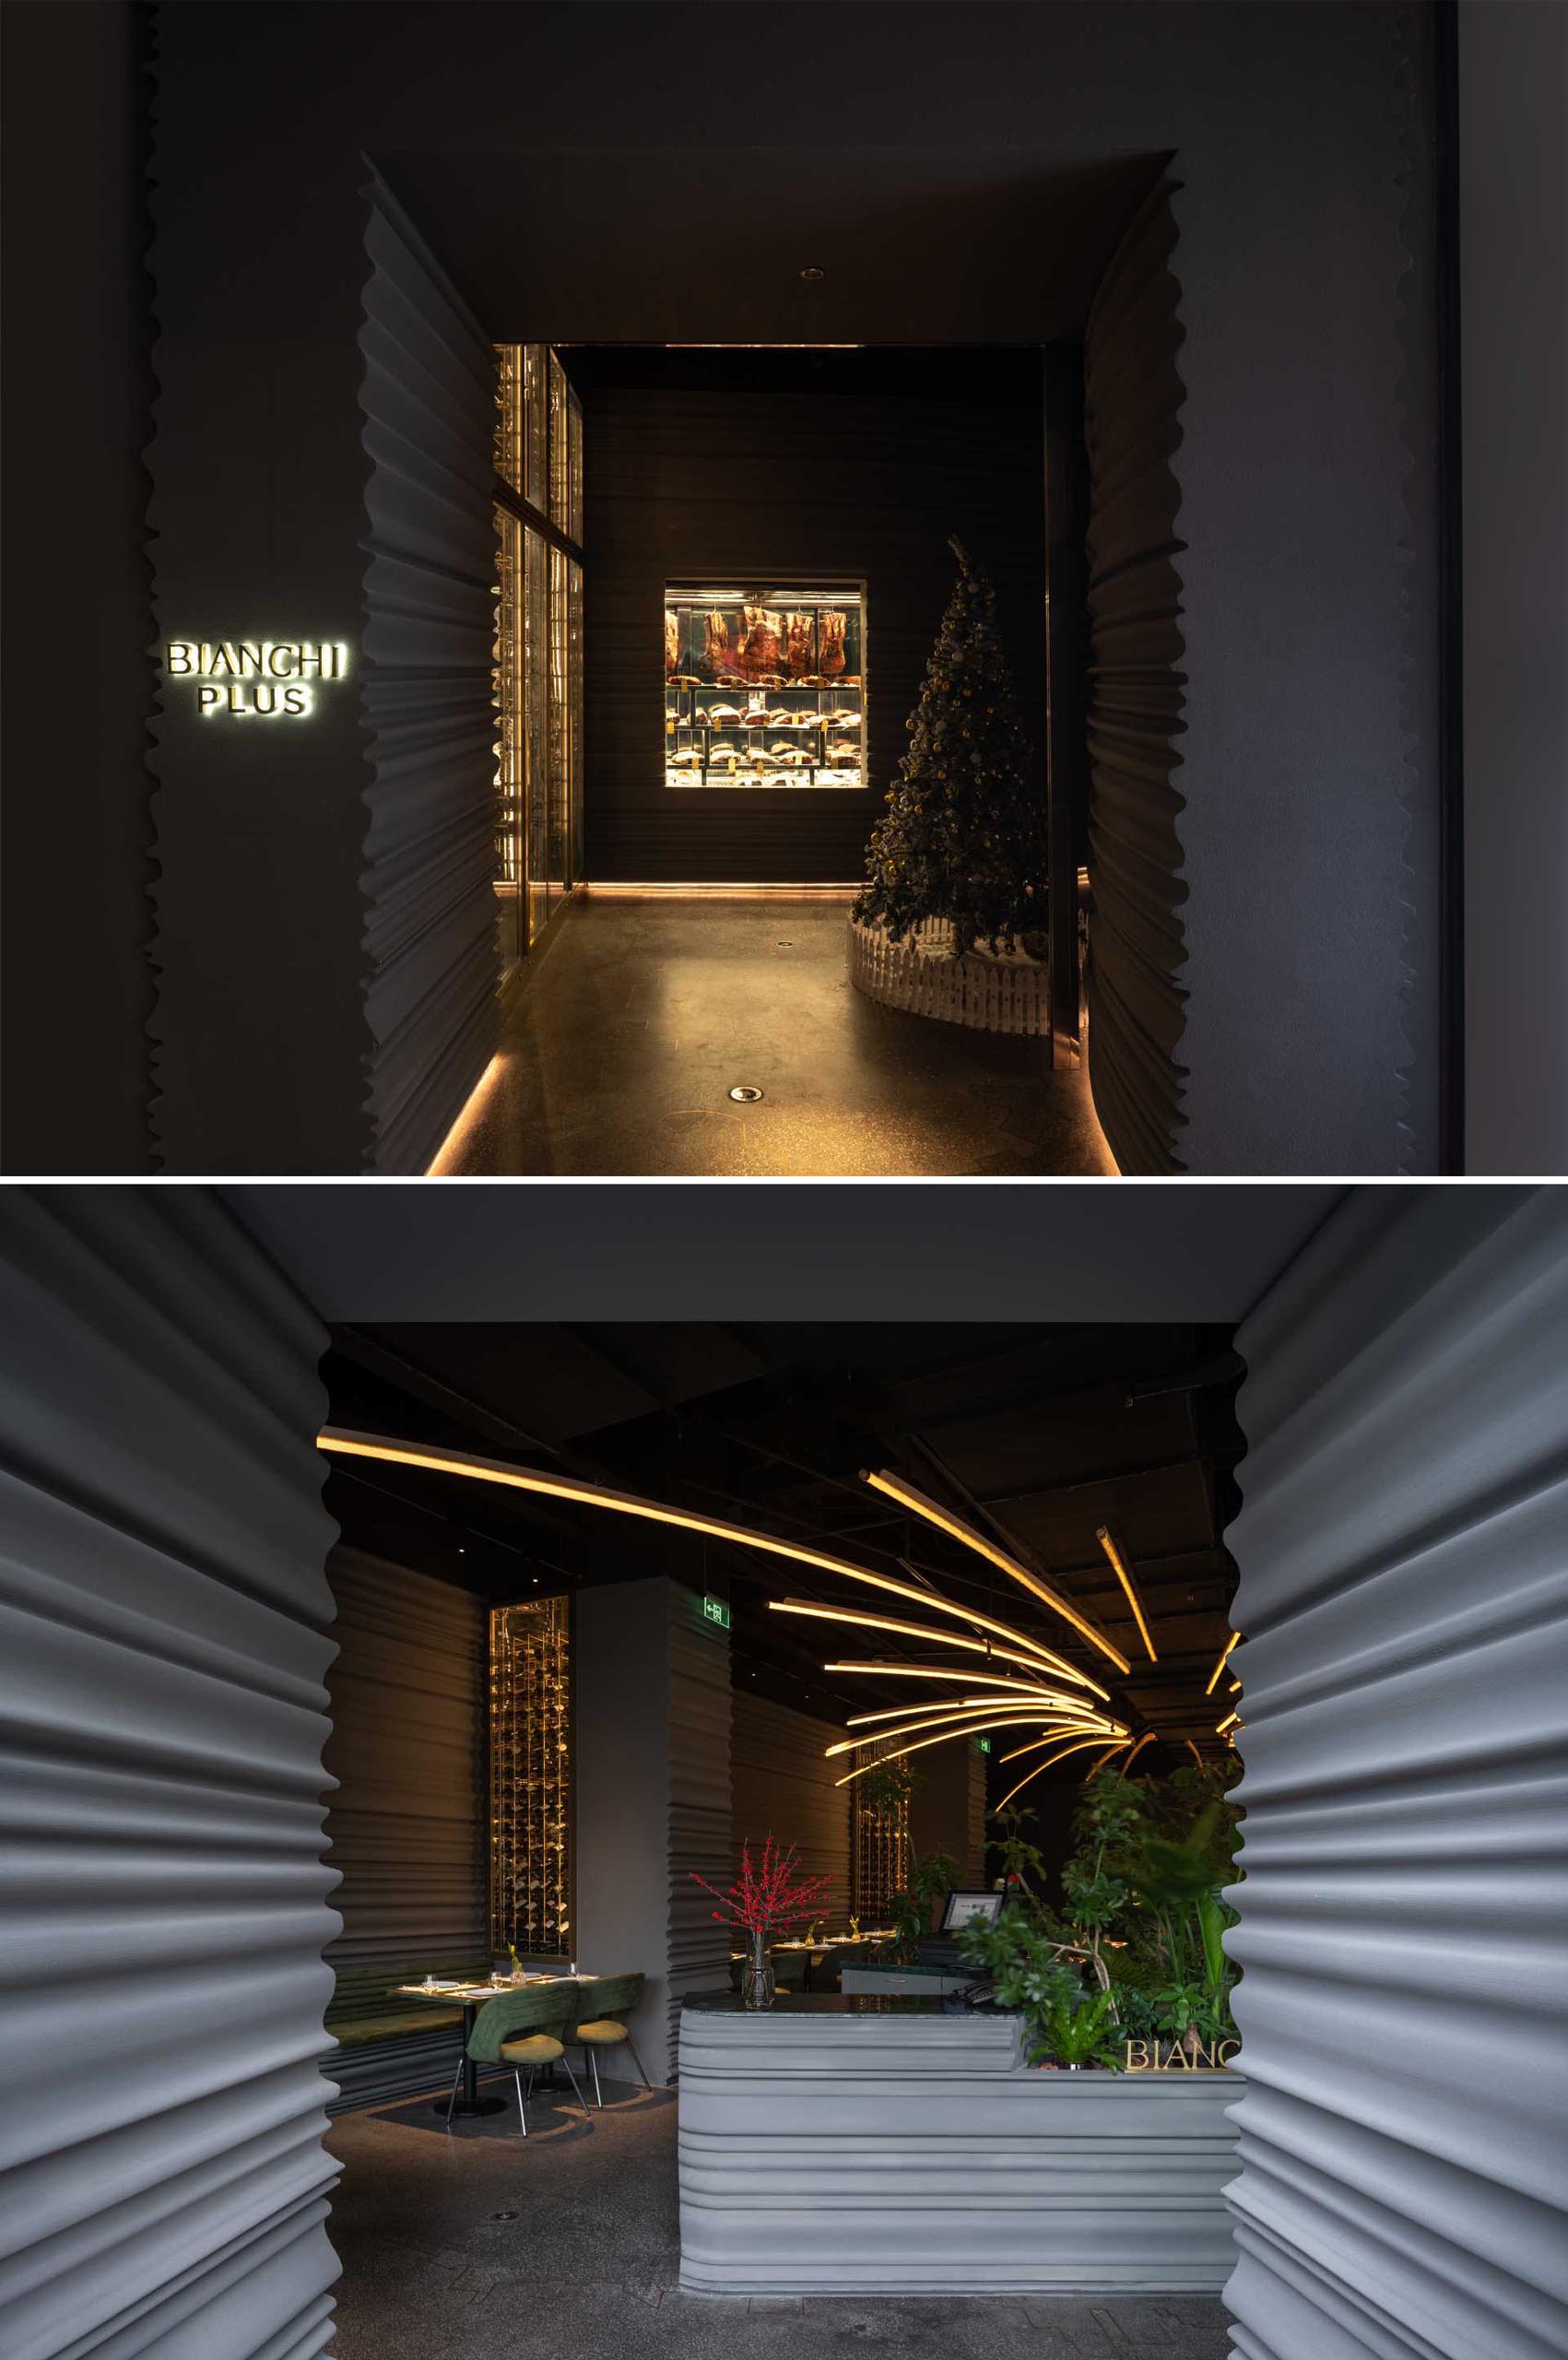 A modern restaurant interior with sculptural curved walls.